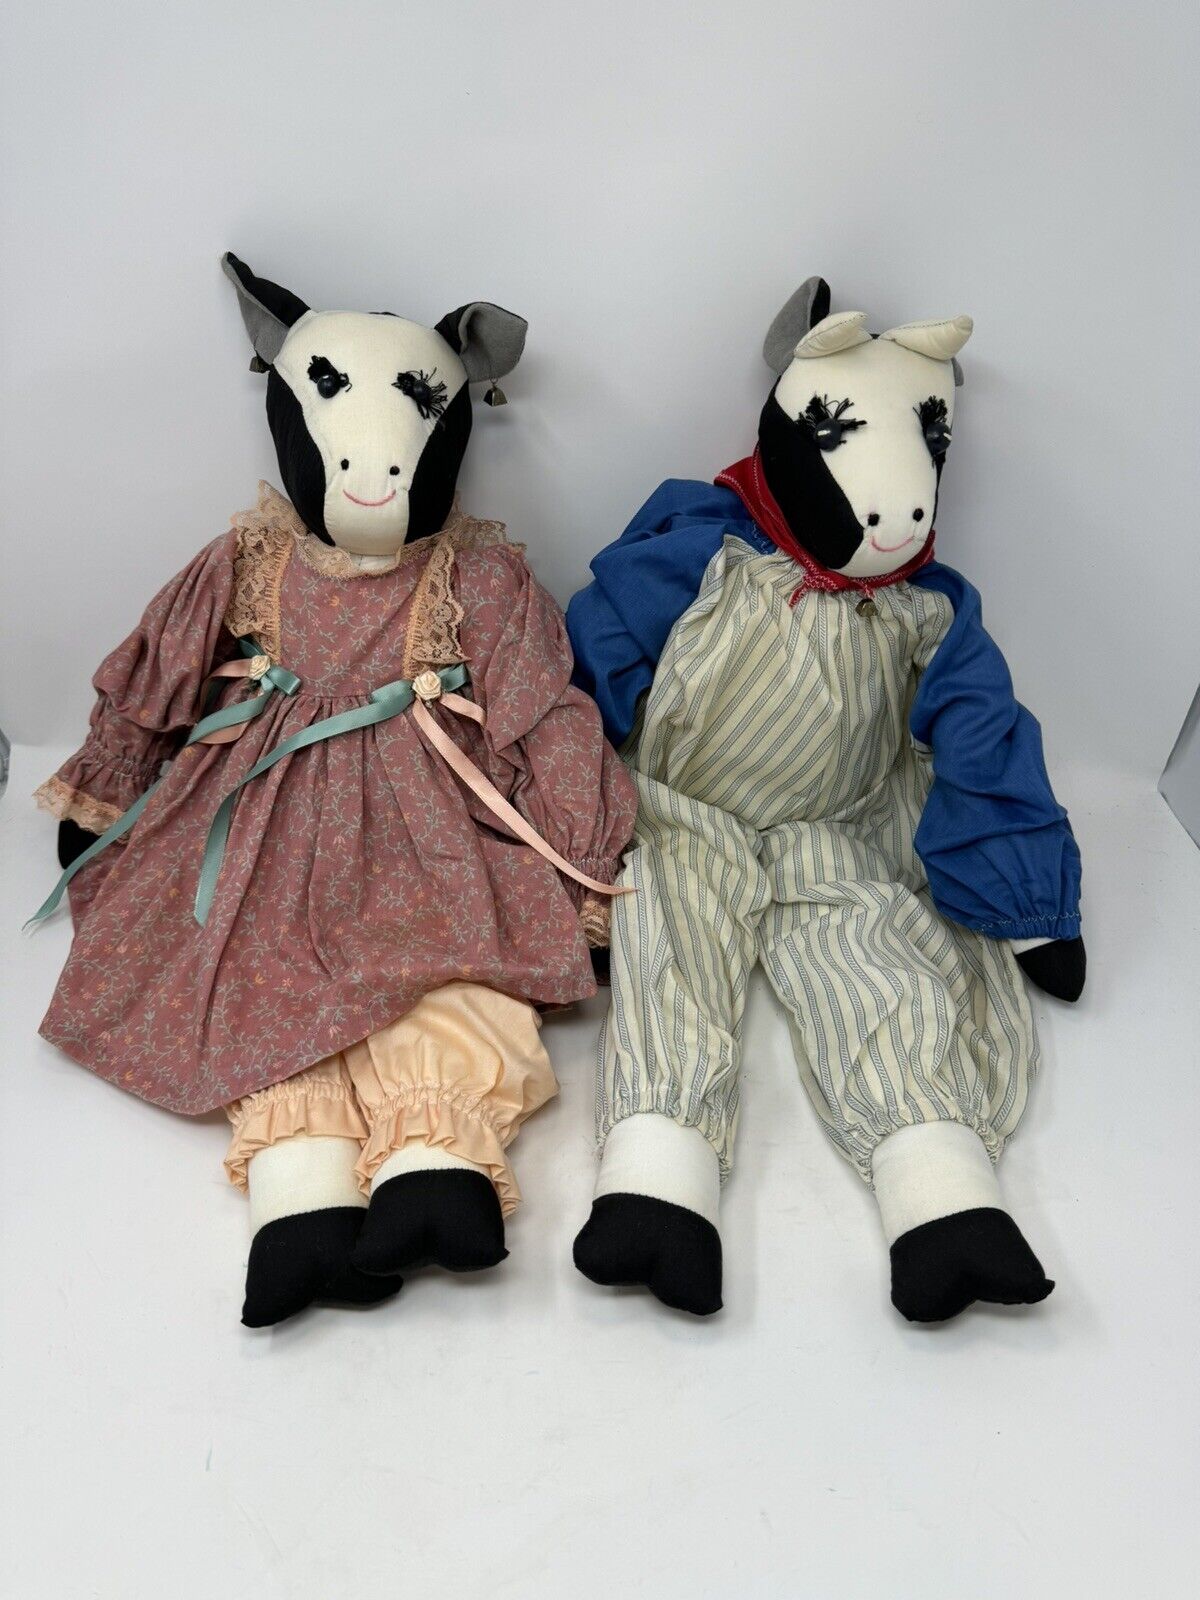 COWS DOLL FOLK ART Sitting Cloth Plush COUNTRY Handmade 22” Vintage Stuffed Toy